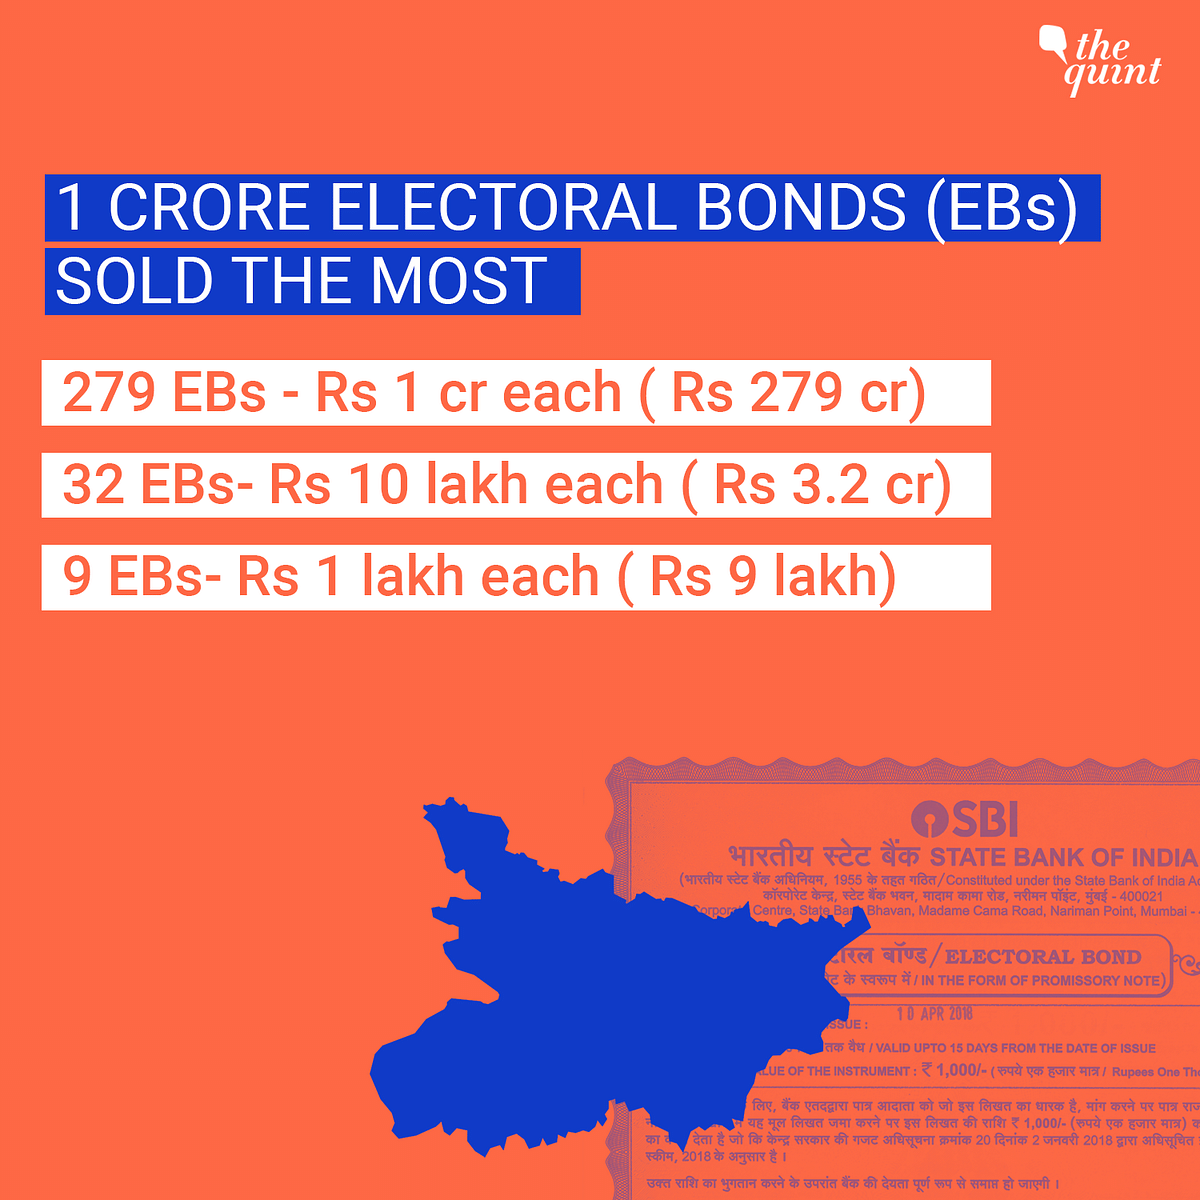  RTI reveals, of Rs 282 crore, Rs 130 crore worth electoral bonds were sold in Mumbai SBI branch before Bihar polls.